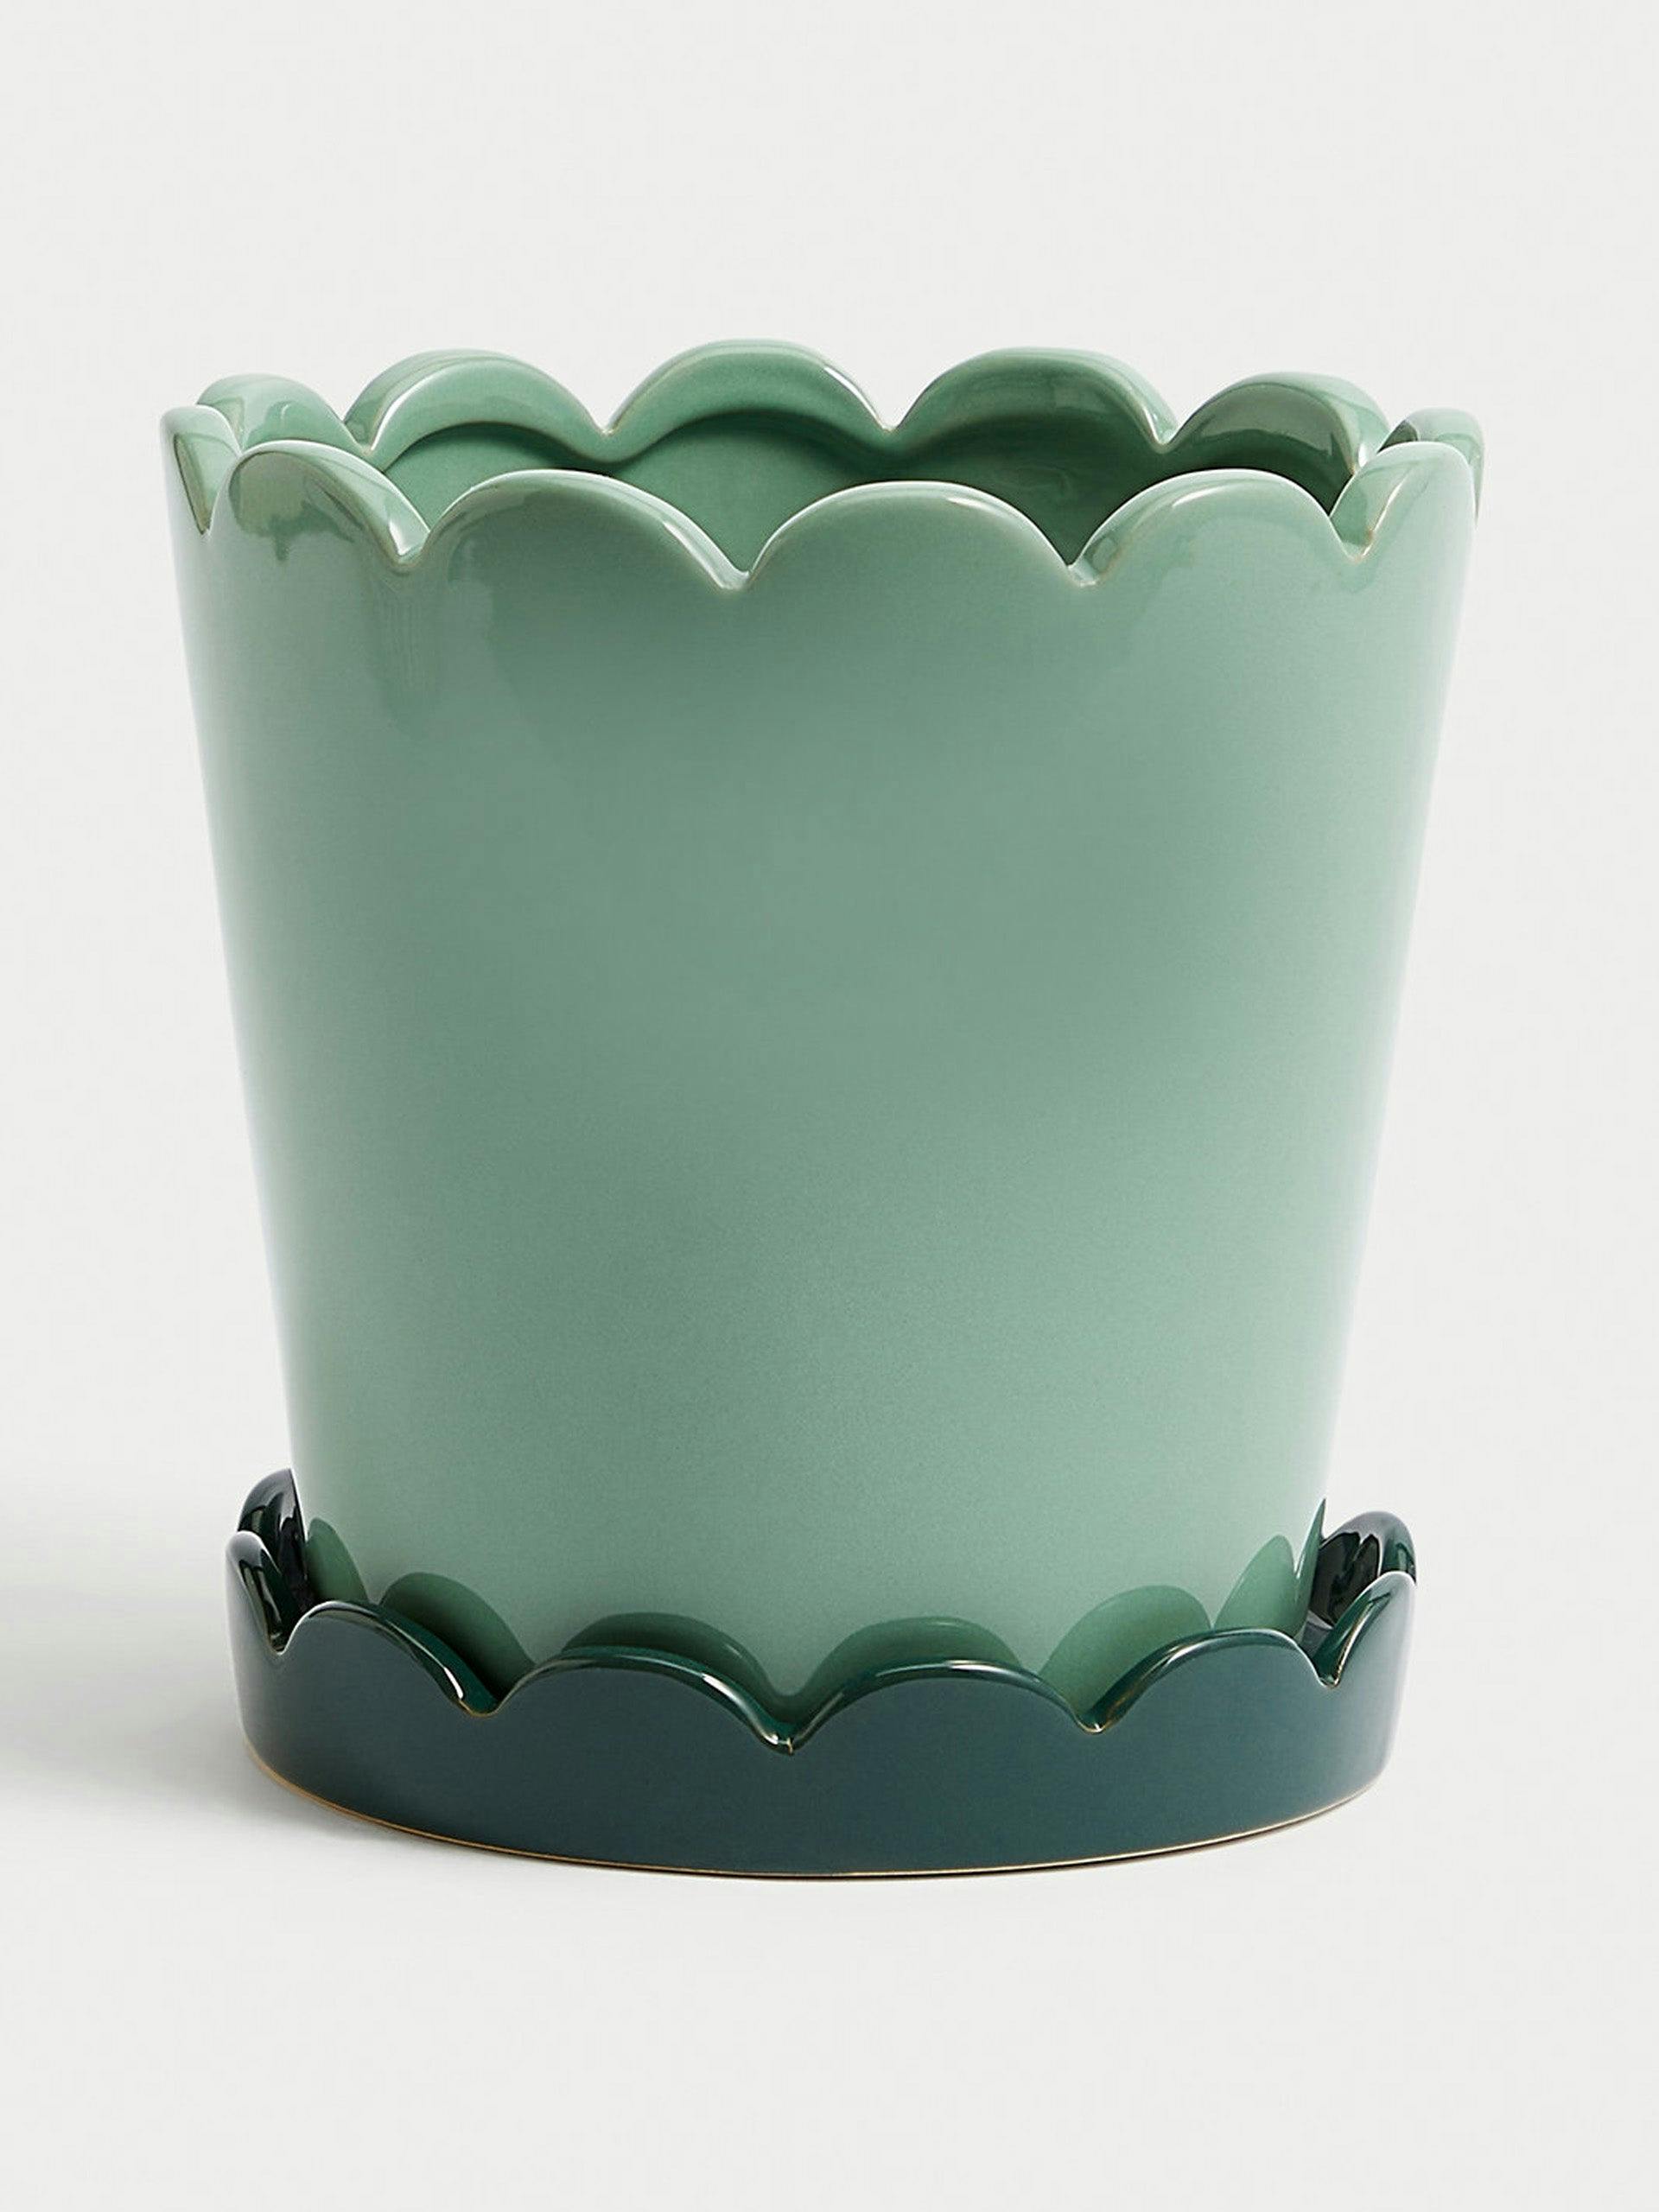 Ceramic scallop planter with tray